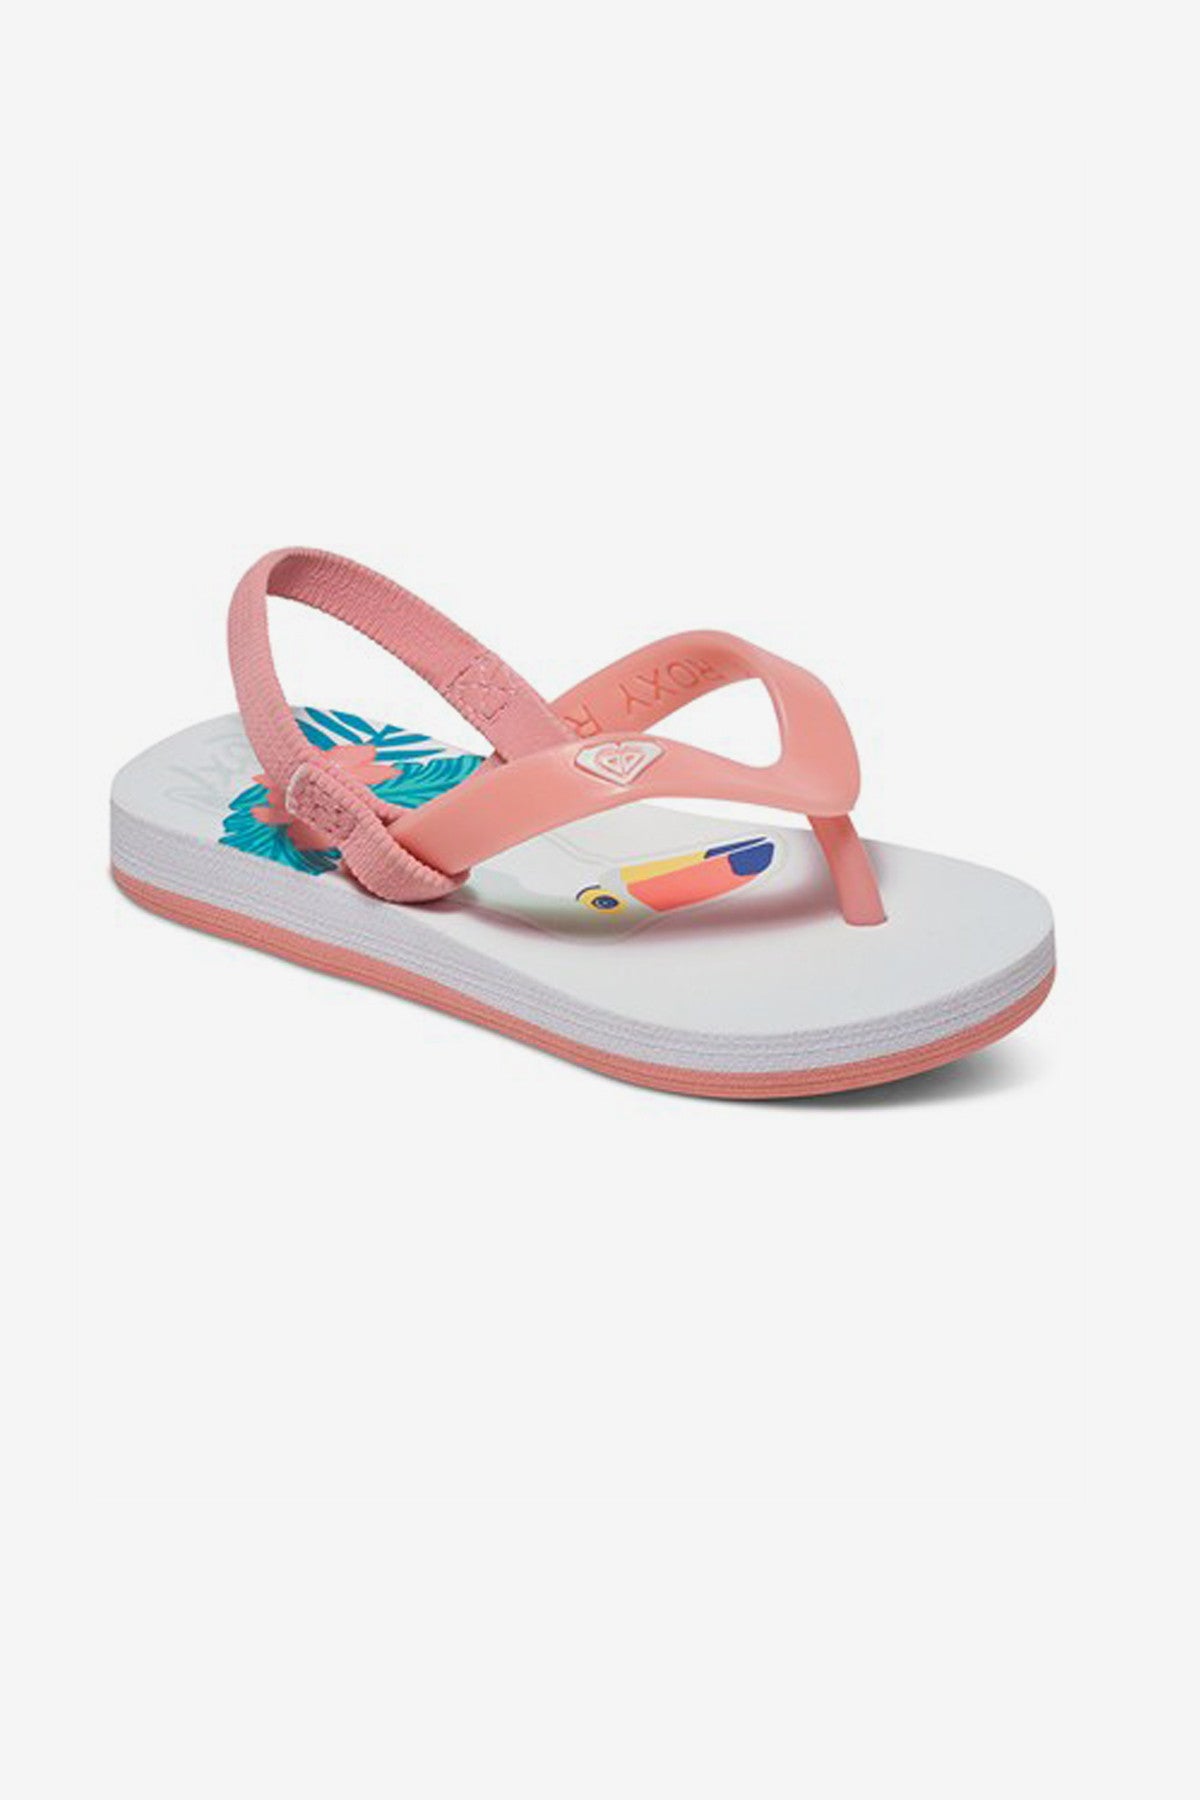 Roxy Tahiti Toucan Backstrap Toddler Girls Sandals – Mini Ruby